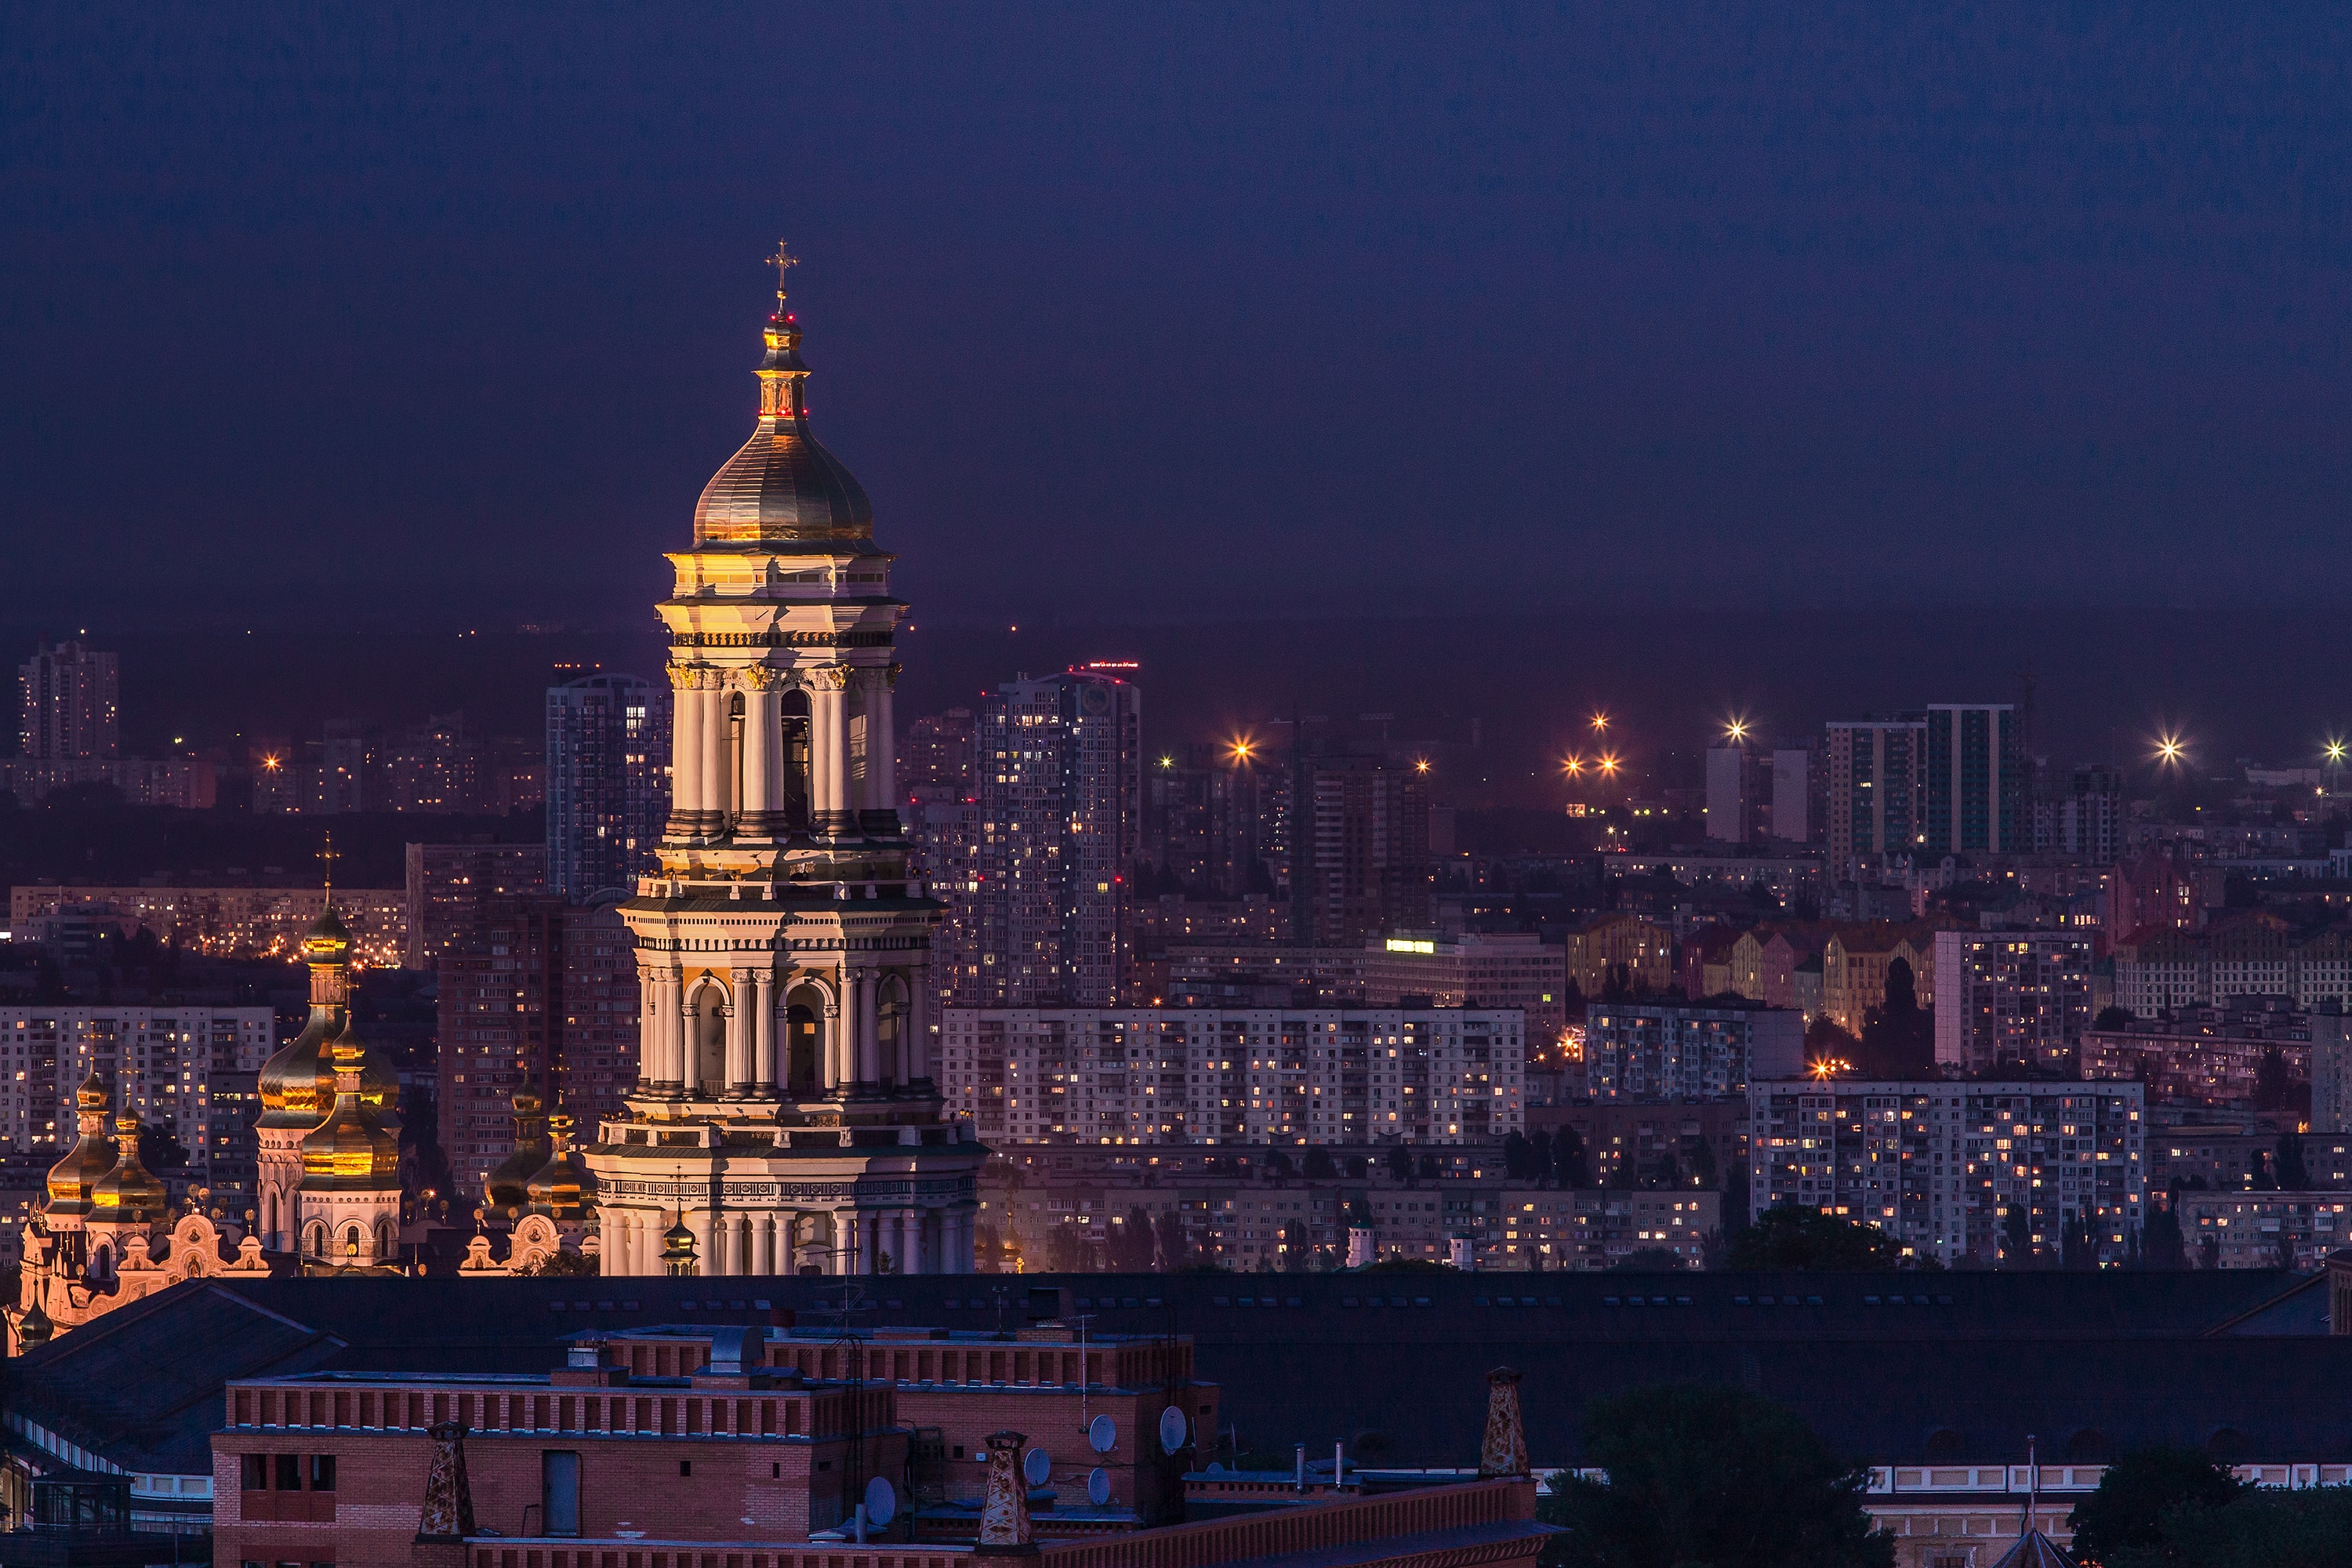 Kyiv-Pechersk Lavra, Ukraine; image by Eugene, via Unsplash.com.